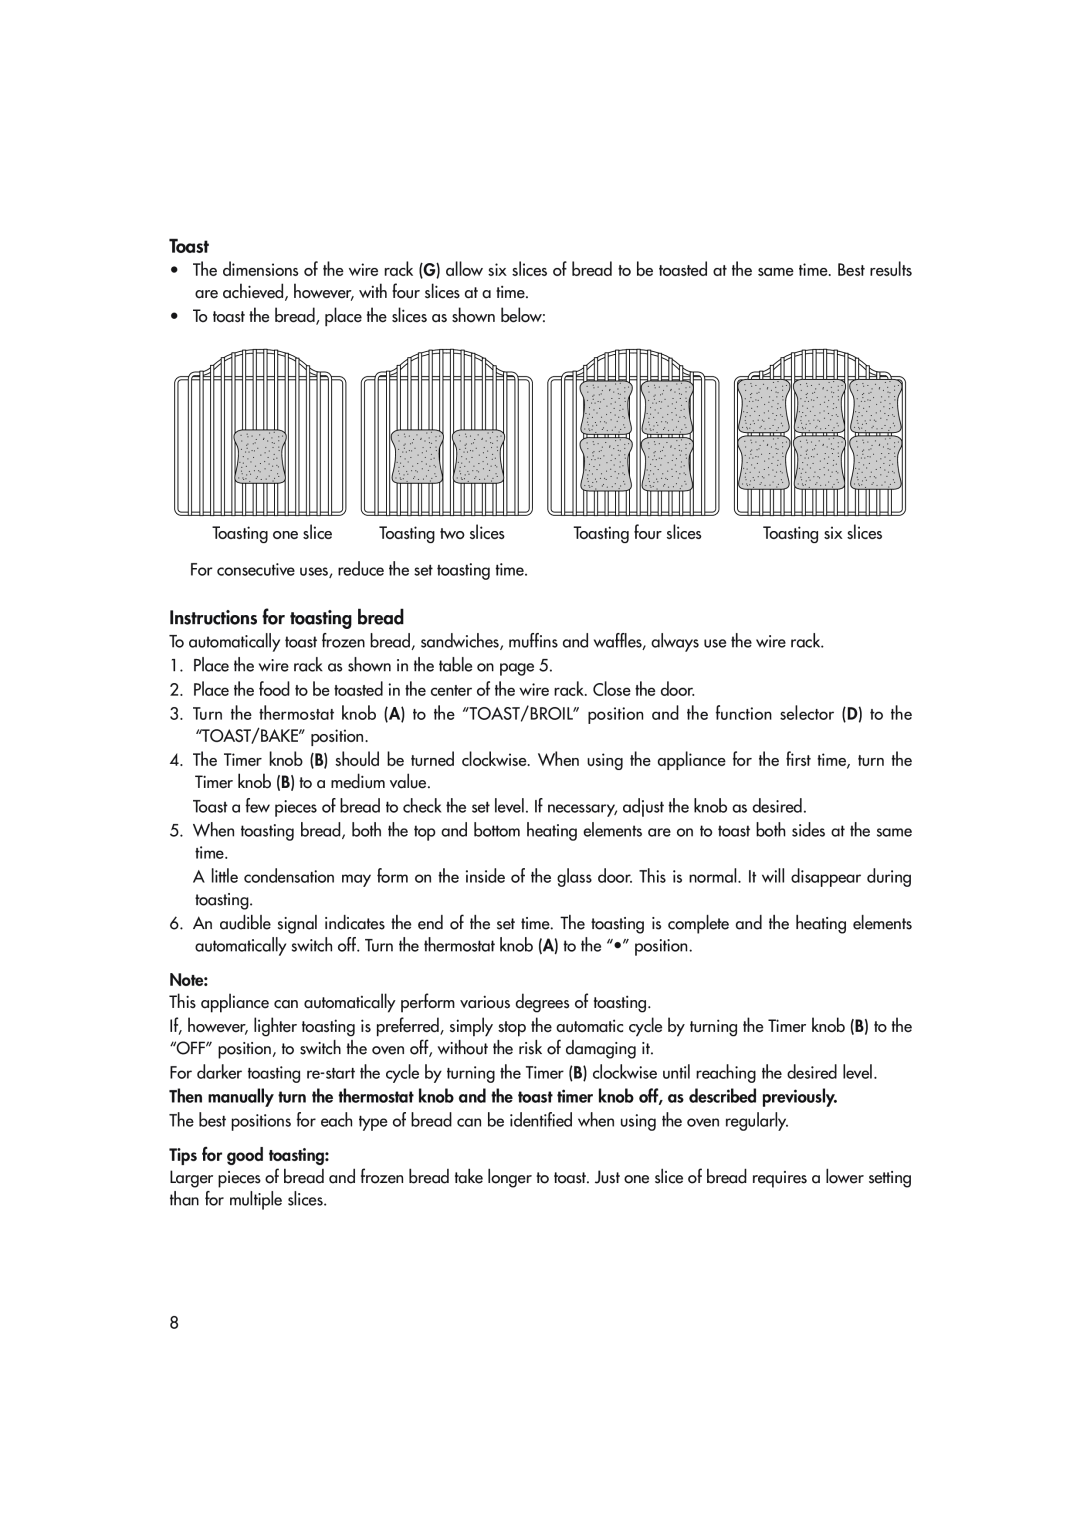 DeLonghi EO1270 B manual Toast, Instructions for toasting bread 